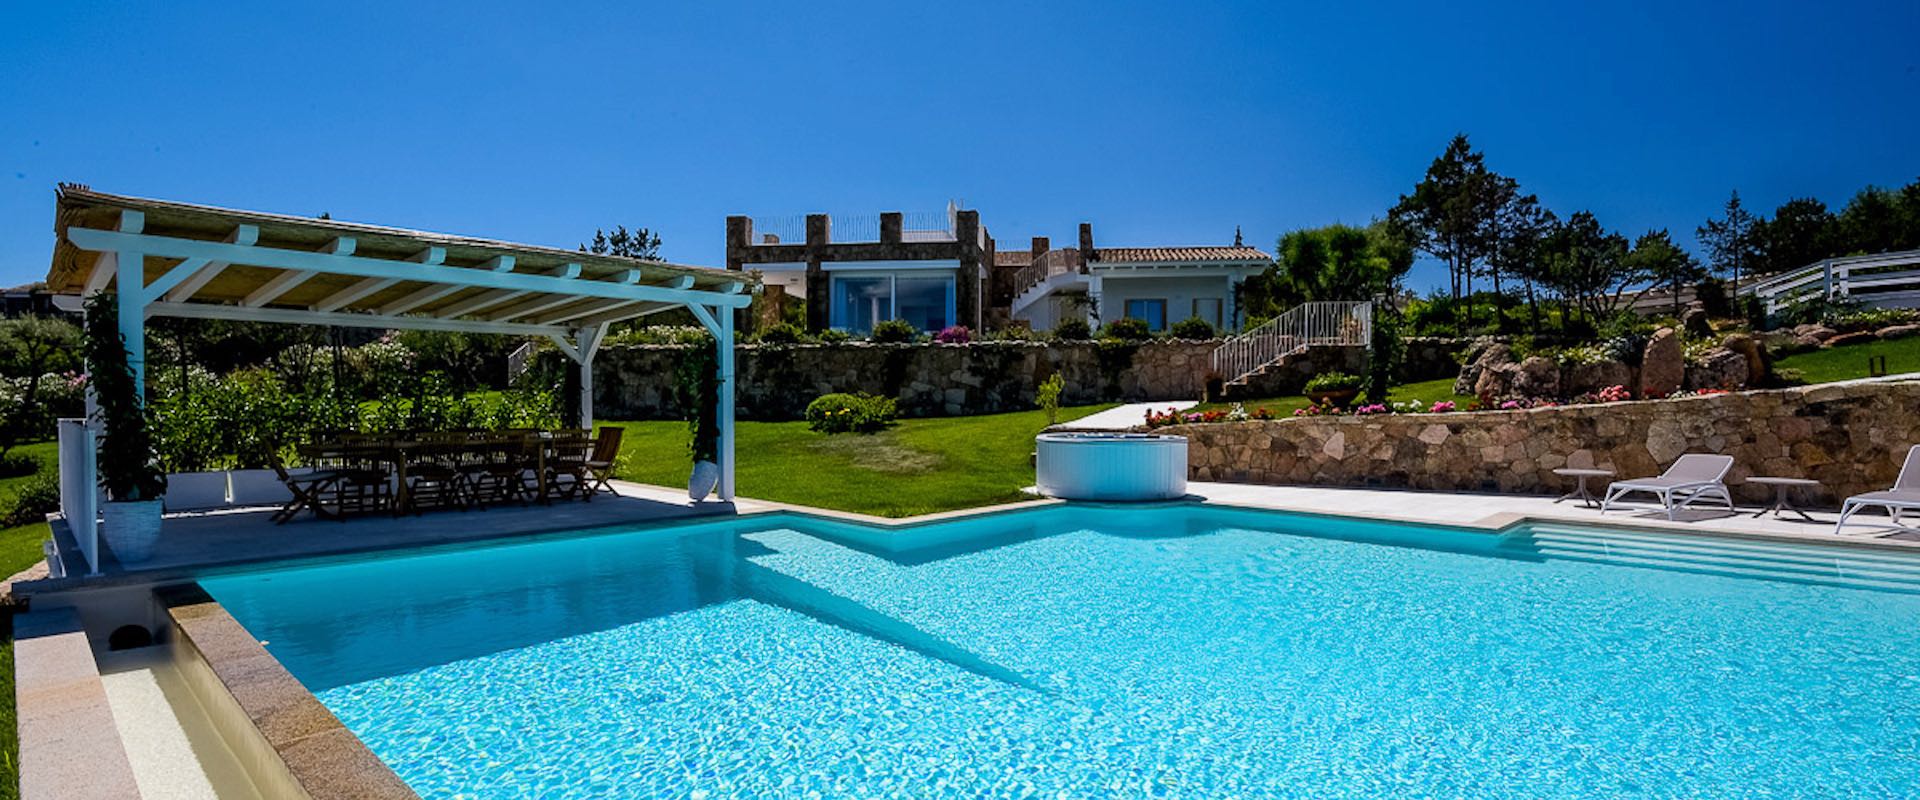 Villa Panorama swimming pool